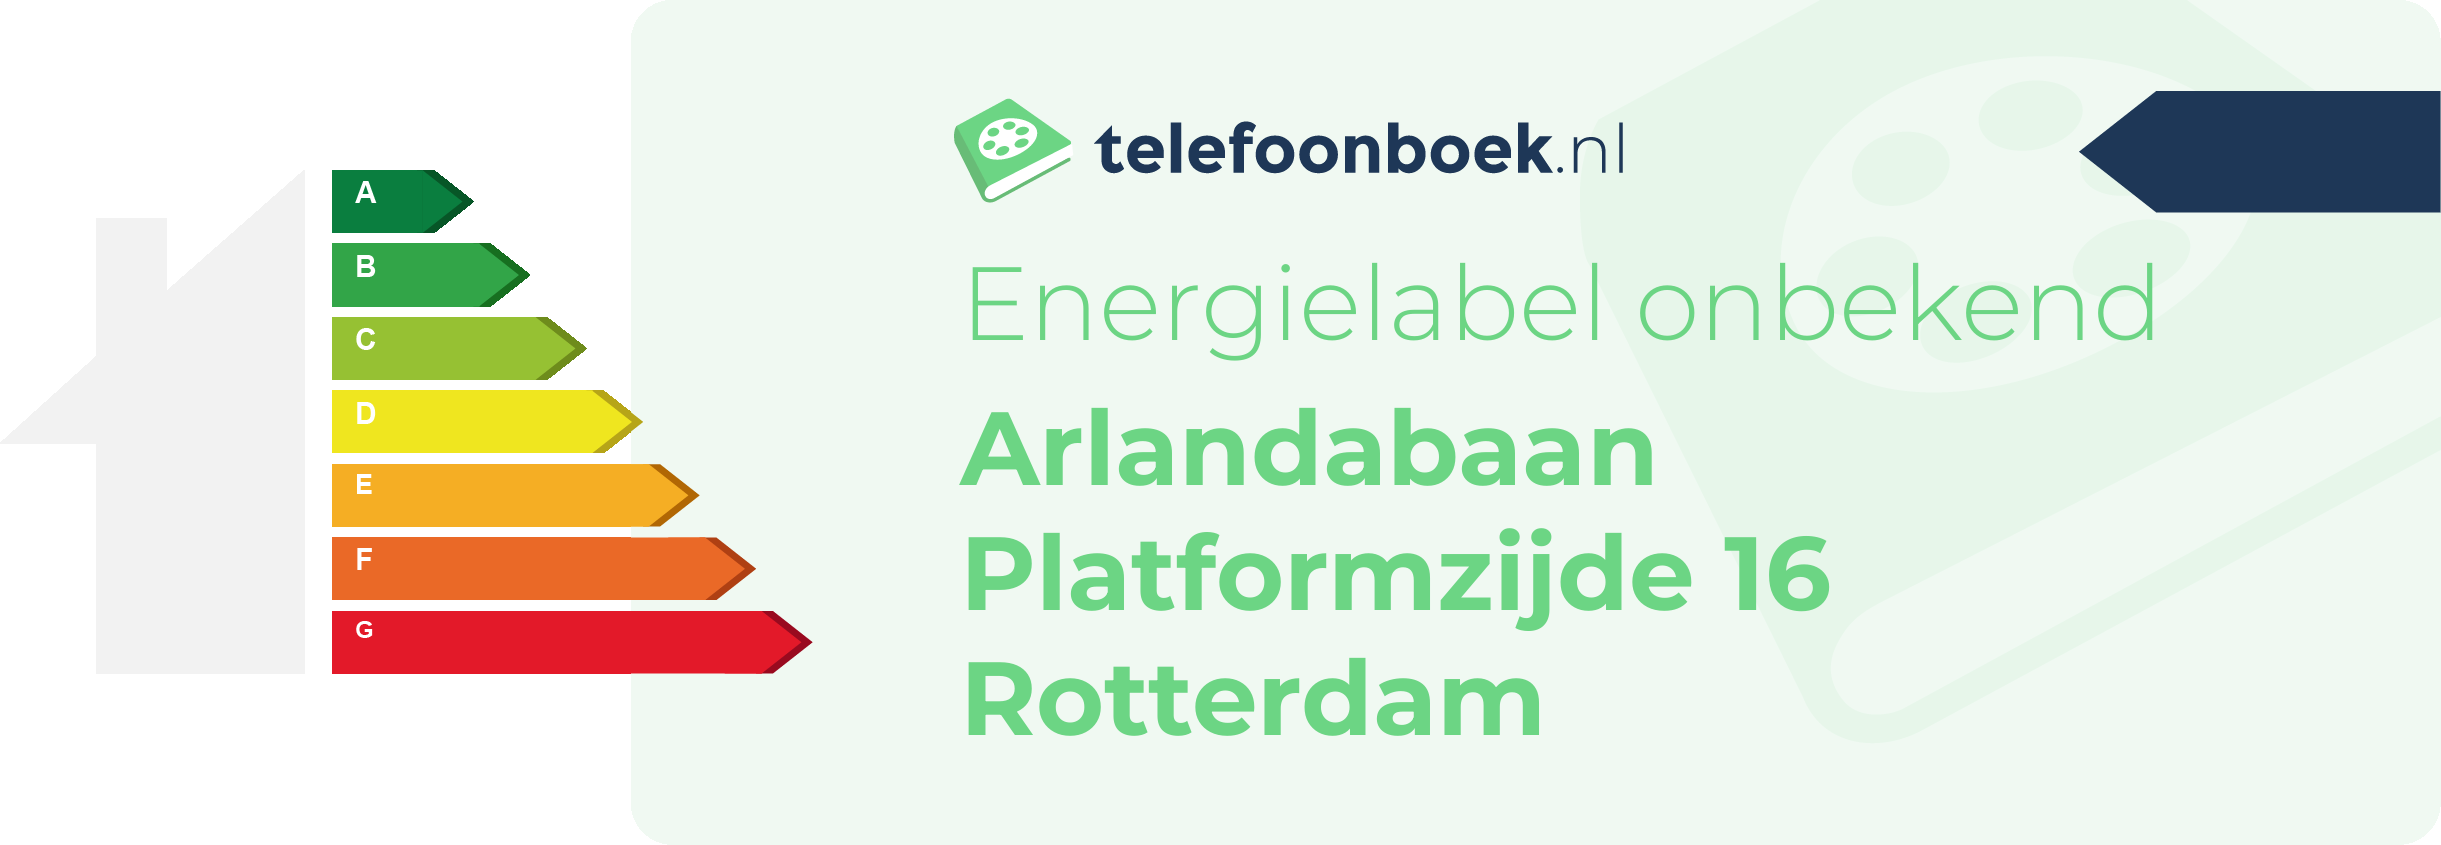 Energielabel Arlandabaan Platformzijde 16 Rotterdam